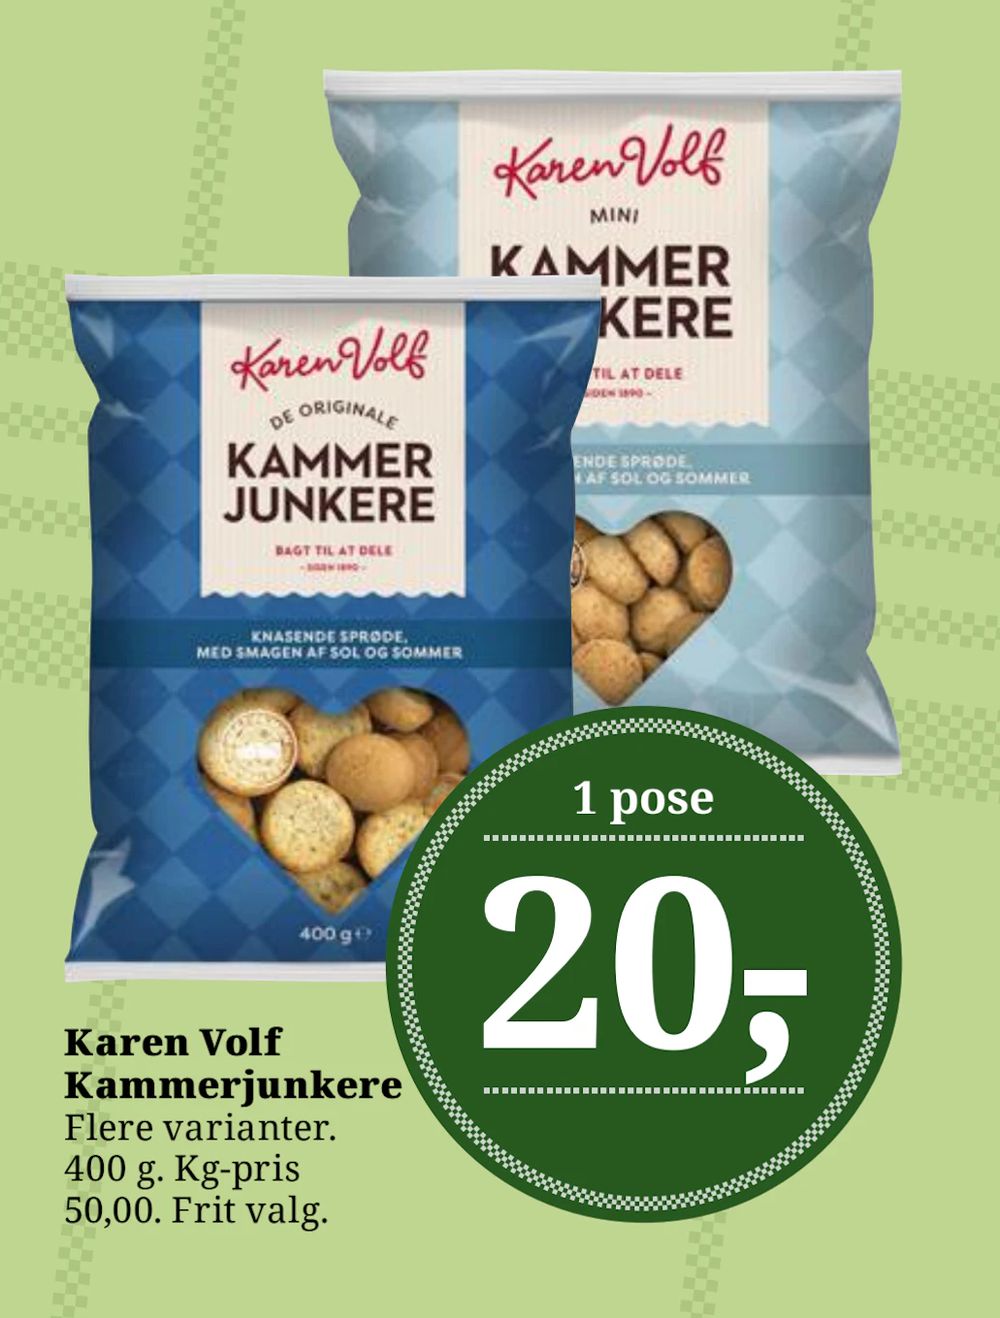 Tilbud på Karen Volf Kammerjunkere fra Dagli'Brugsen til 20 kr.